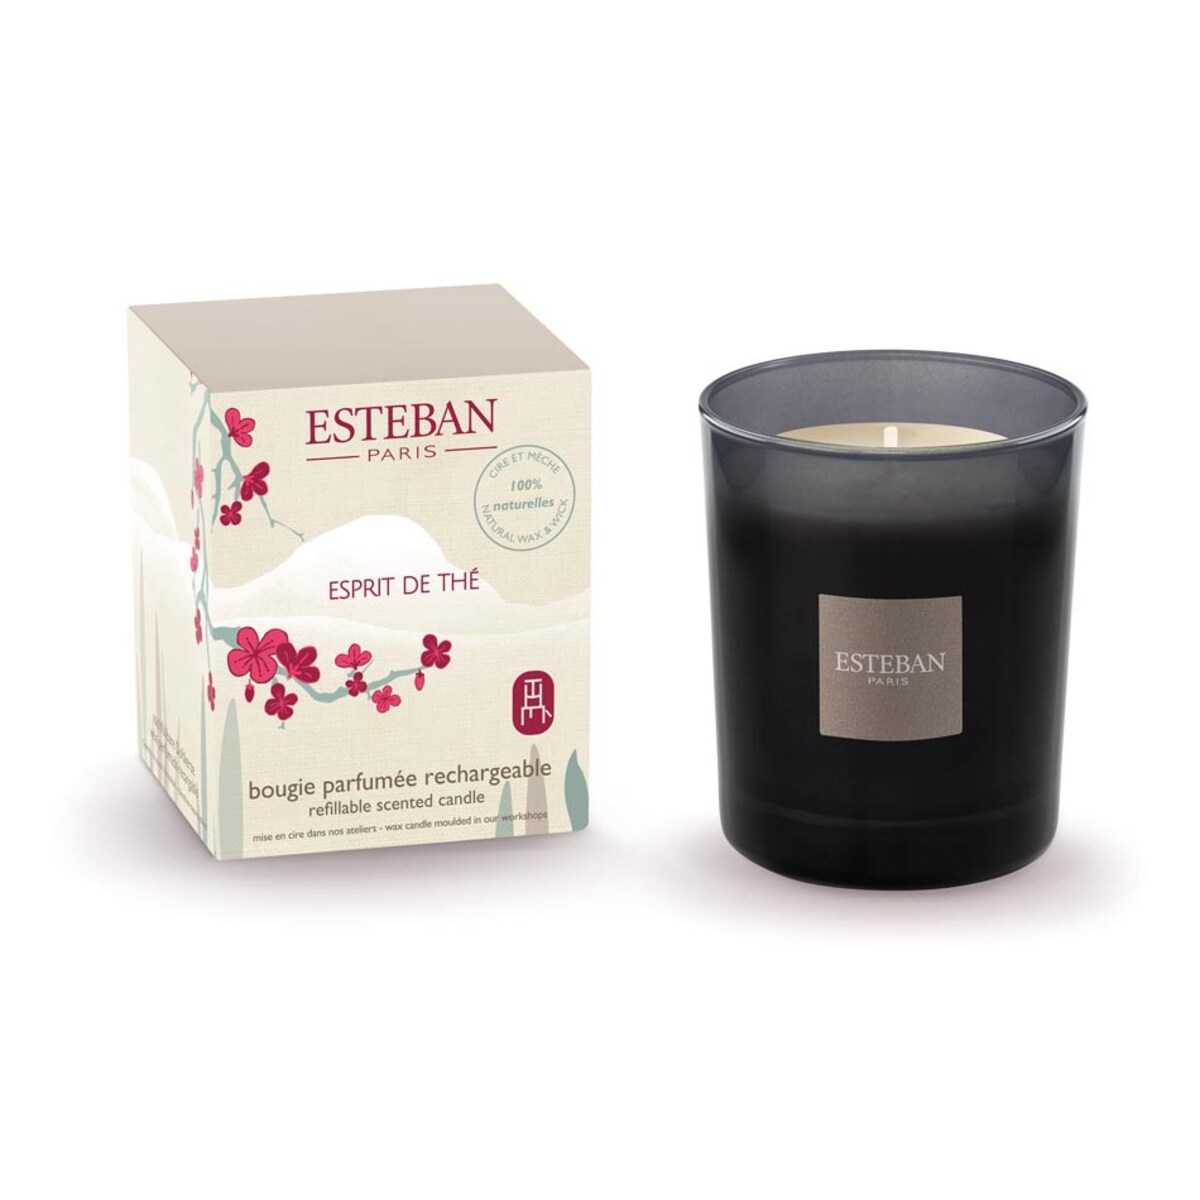 Świeca zapachowa Esprit de thé, 180 g, Esteban